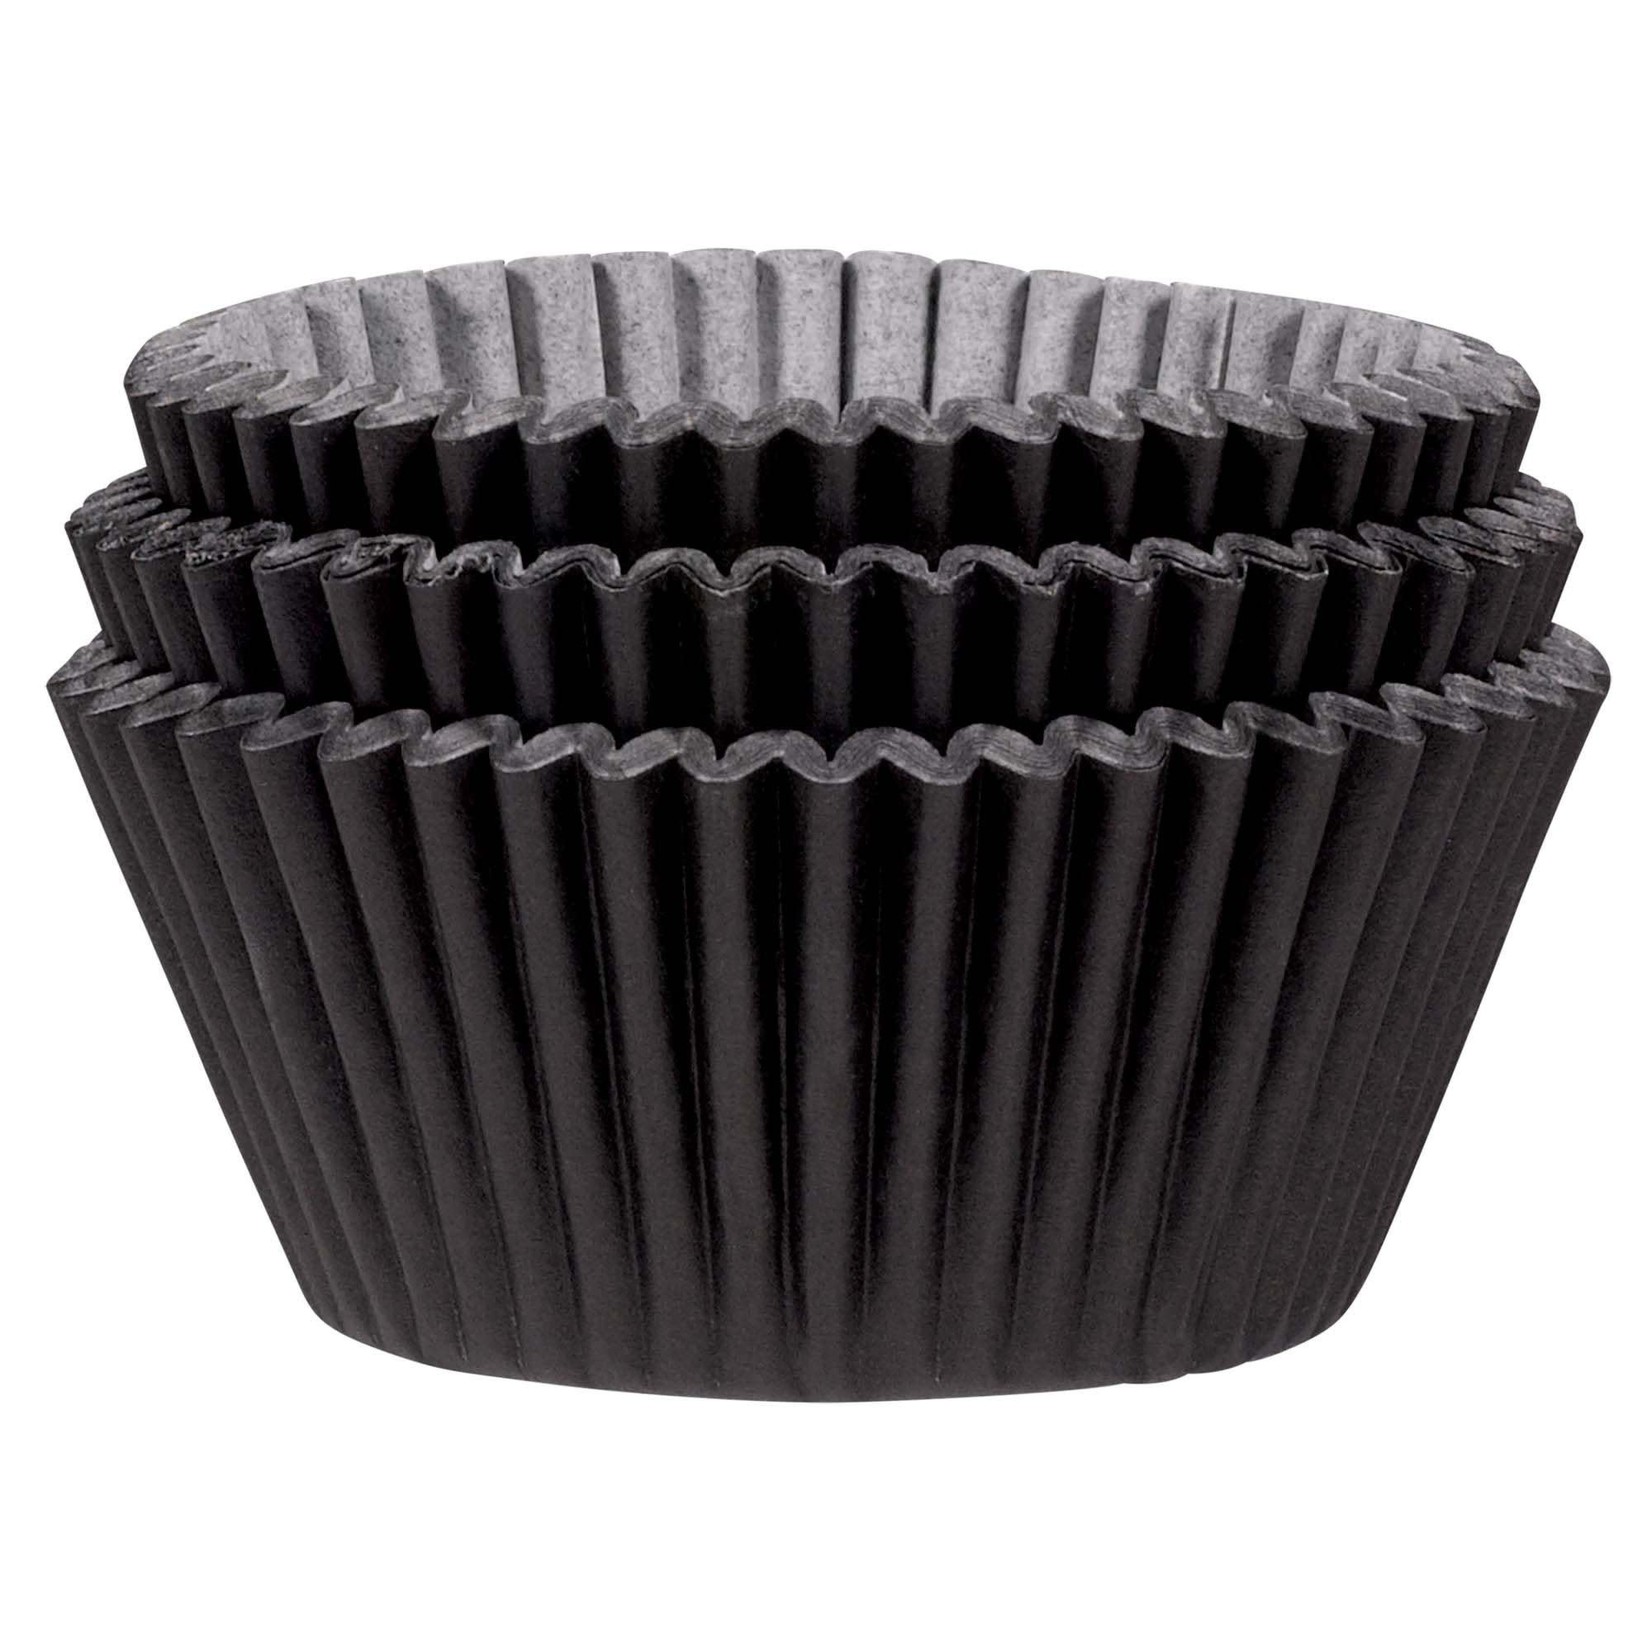 Amscan 2' Black Baking Cups - 75ct.